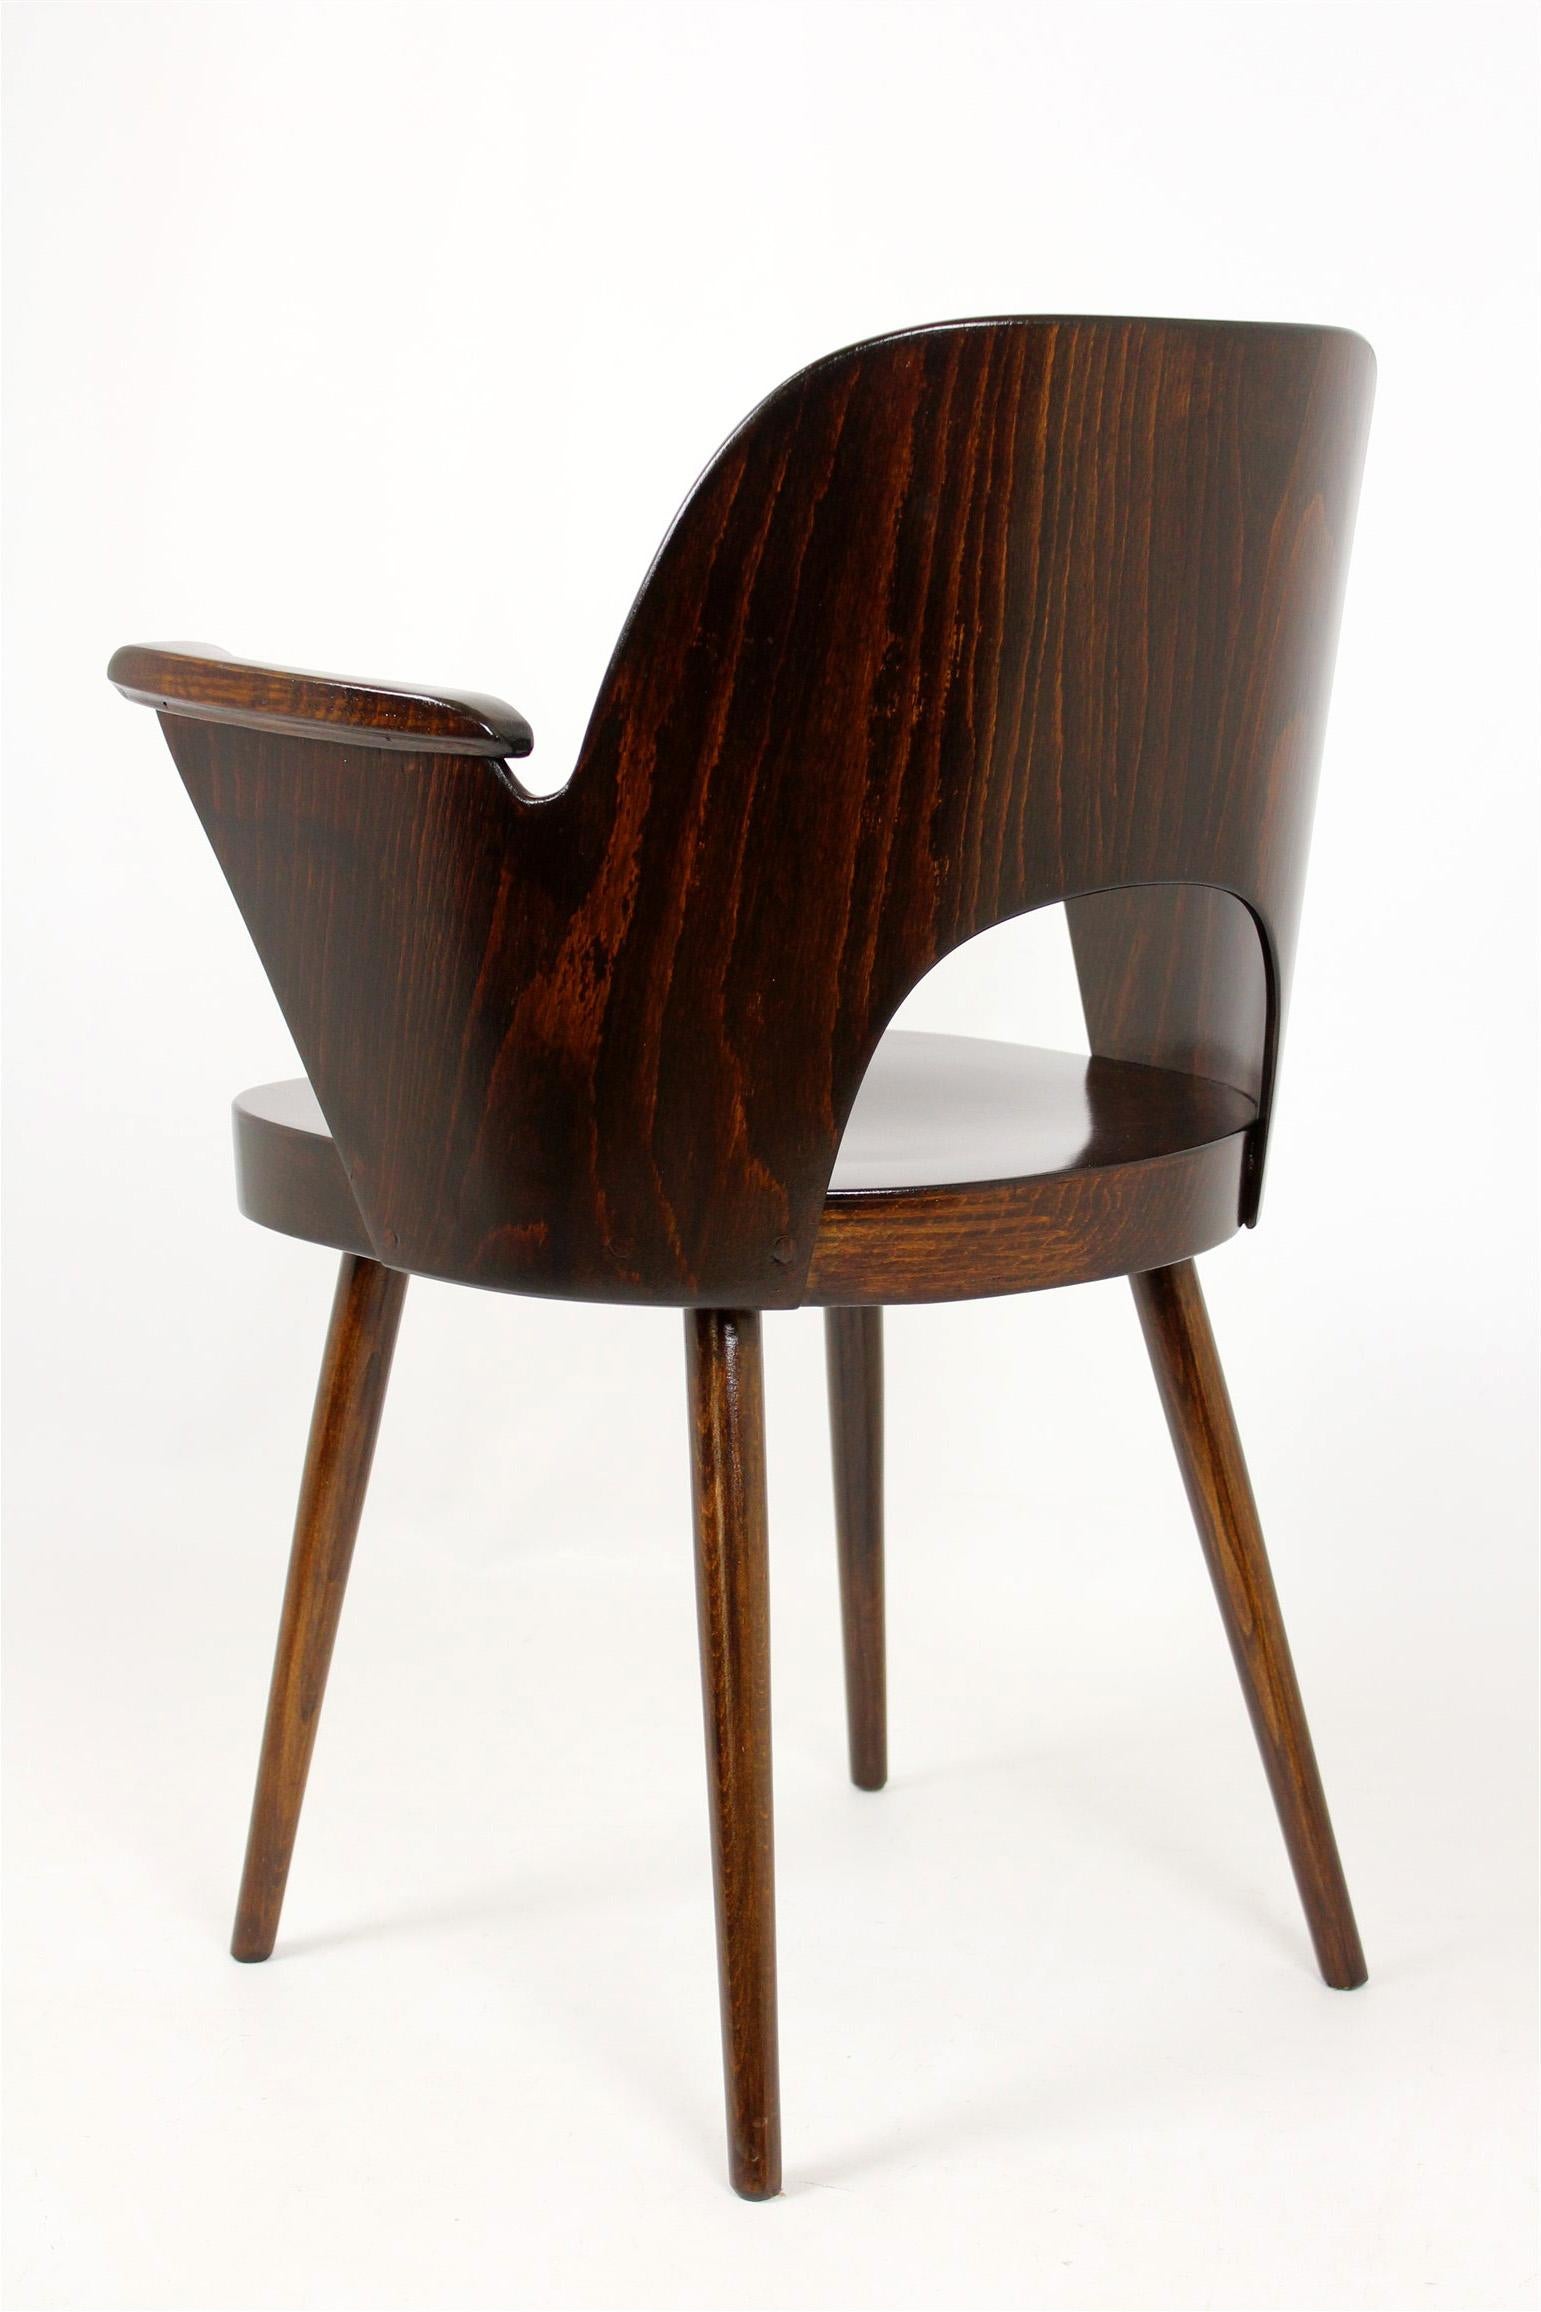 Czech Wooden Armchair by Lubomír Hofmann for Ton, 1950s